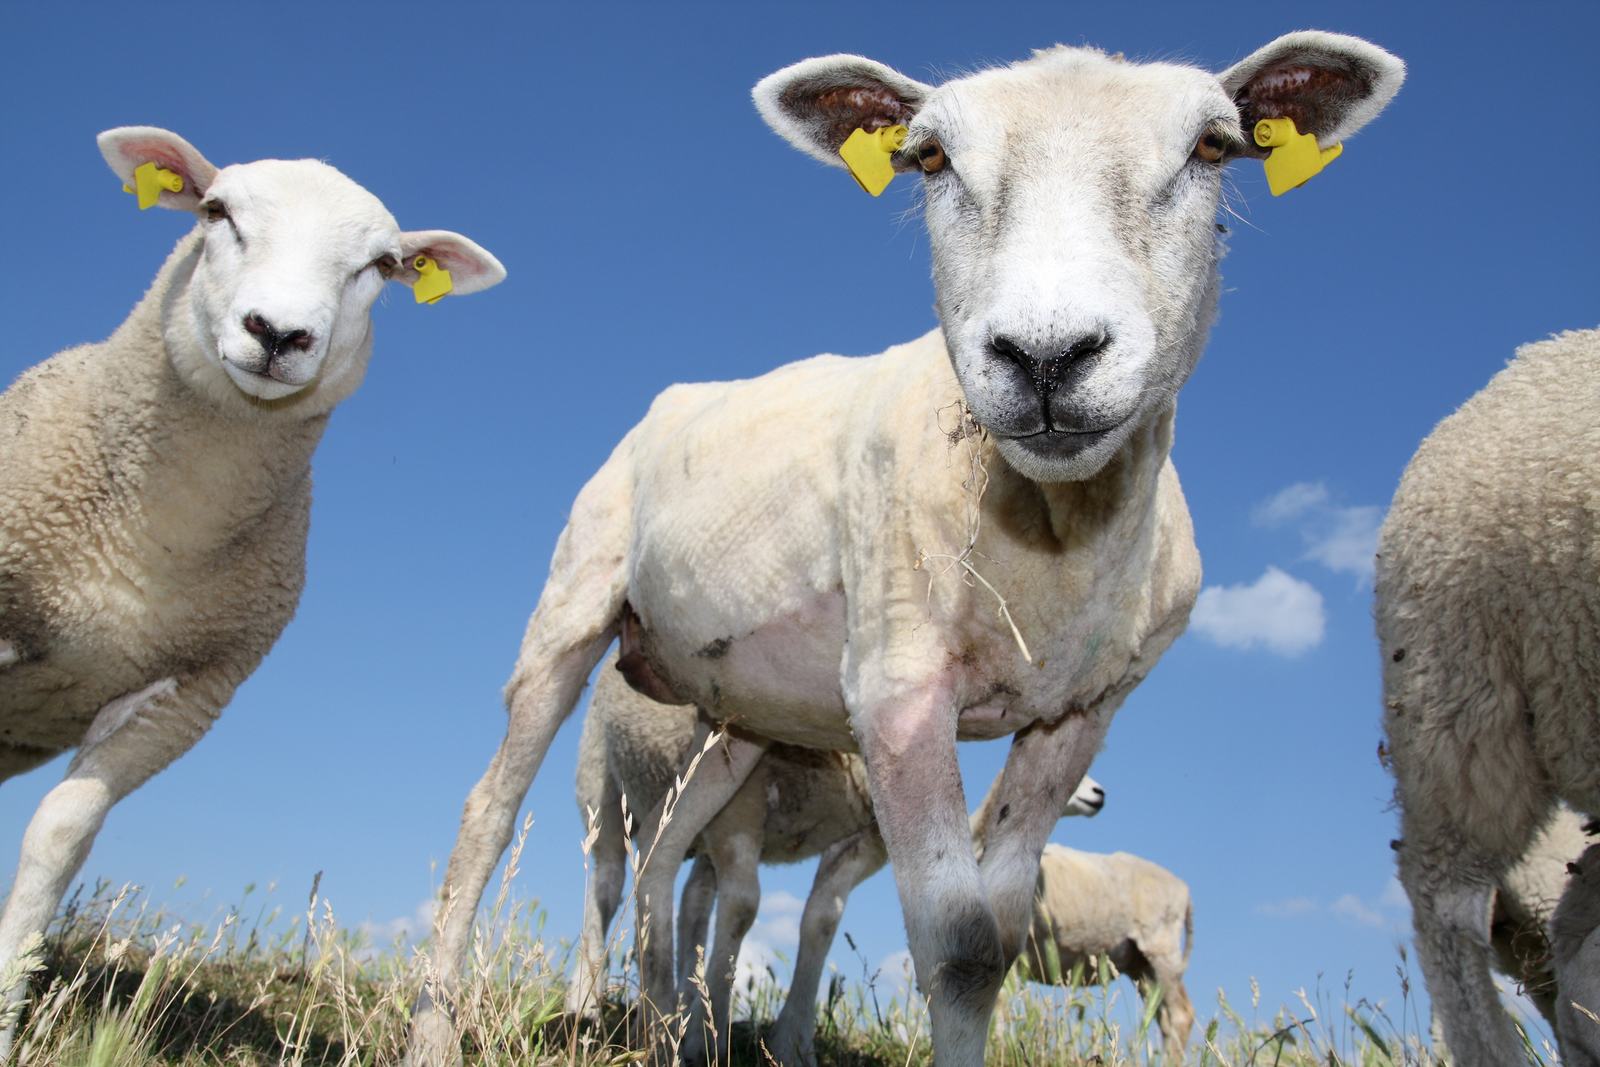 Crambe as soybean alternative in lamb diets